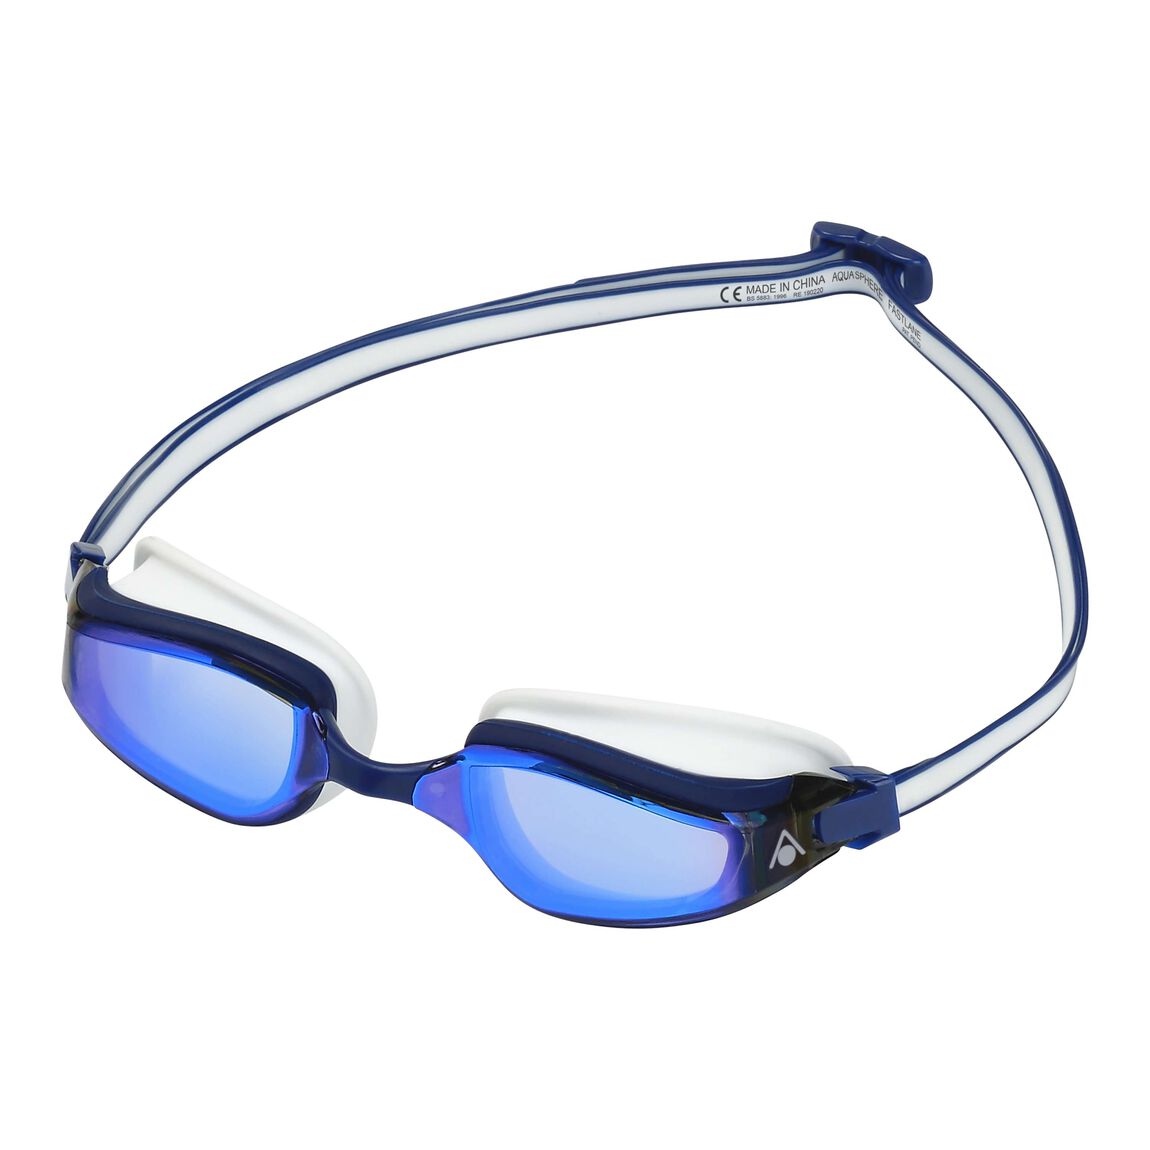 Aquasphere Fast Lane Goggles - Mirrored